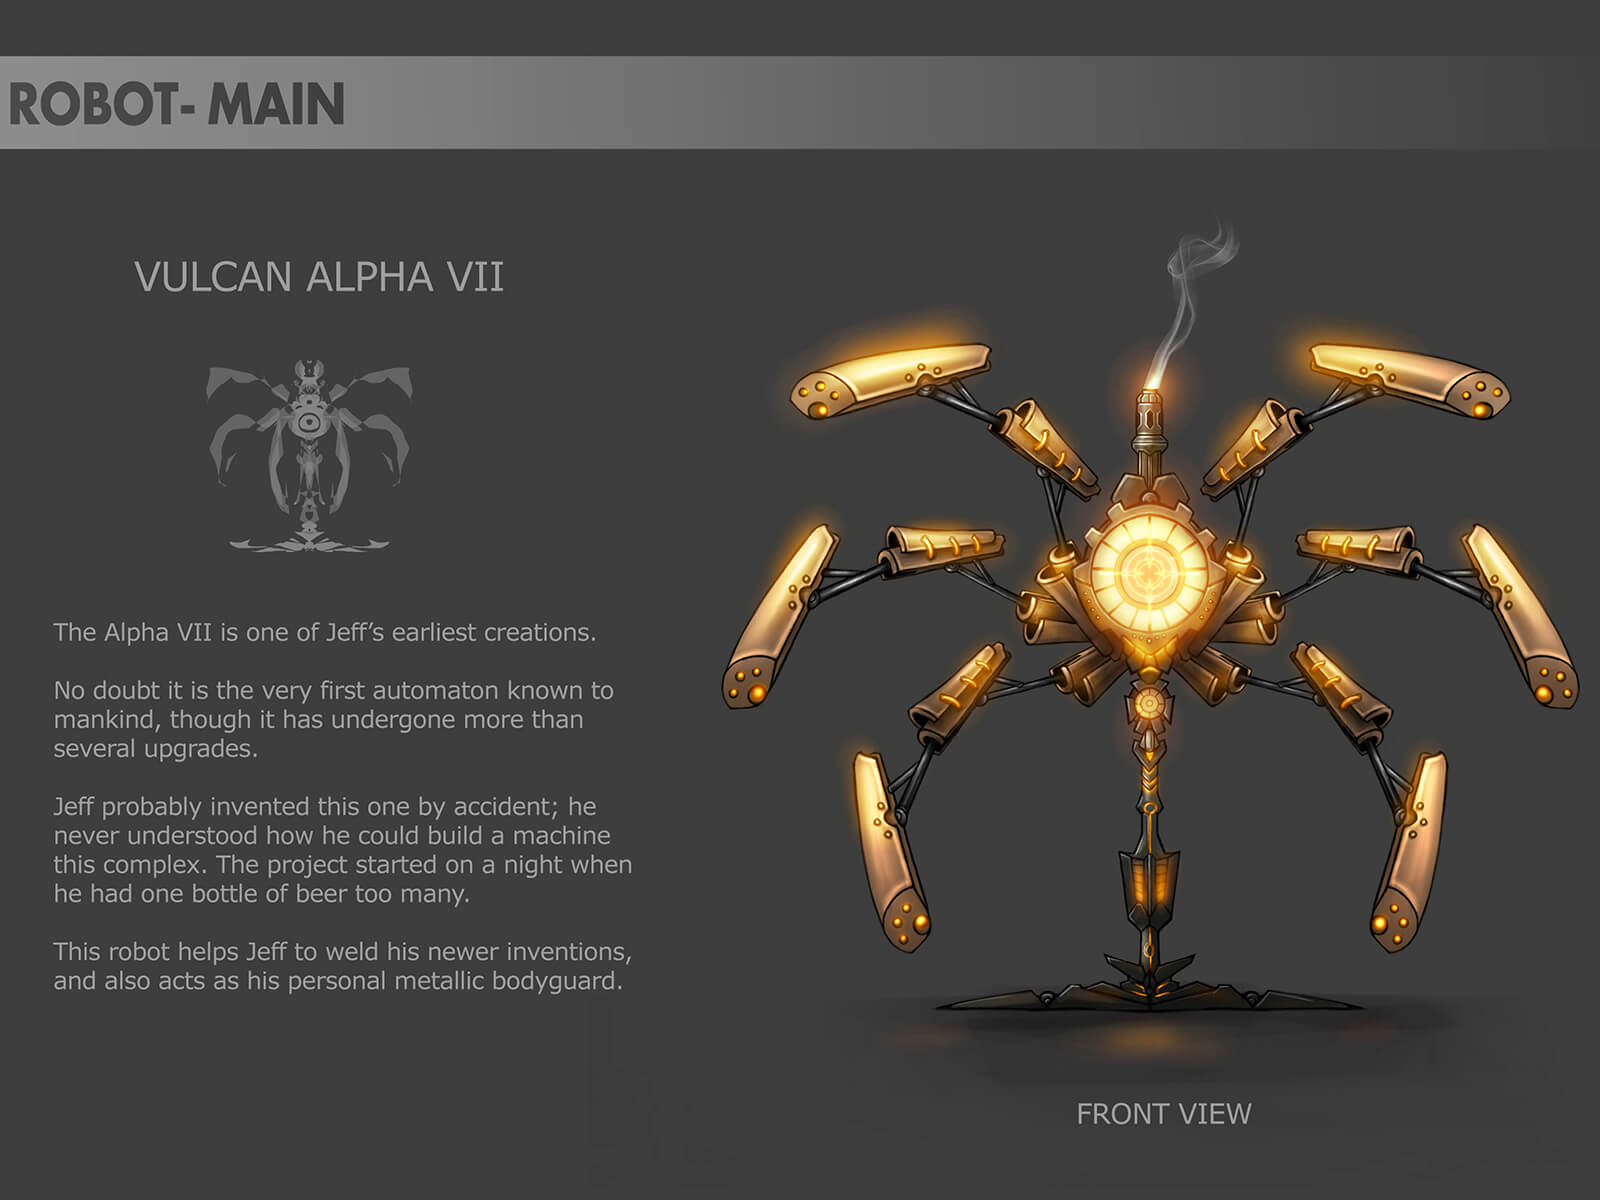 Concept art of a multi-legged golden robot resembling an upright spider, along with name "Vulcan Alpha VII" and description.